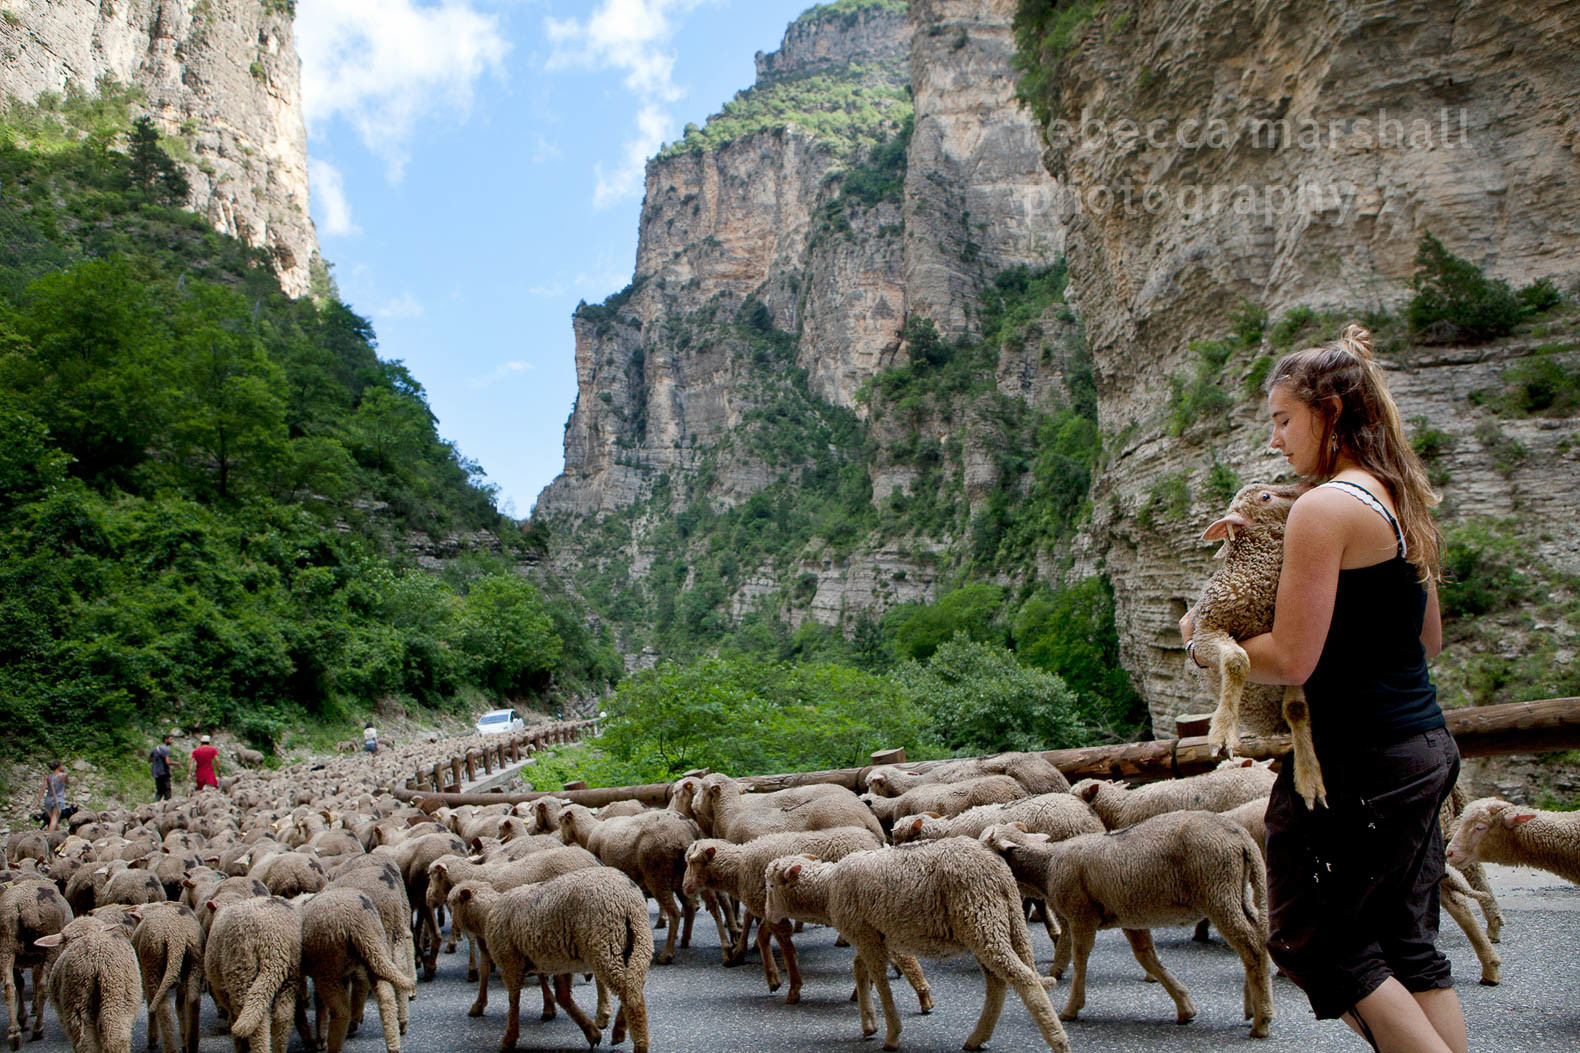 Photograph of a shepherdess carrying a lamb alongside a flock of sheep